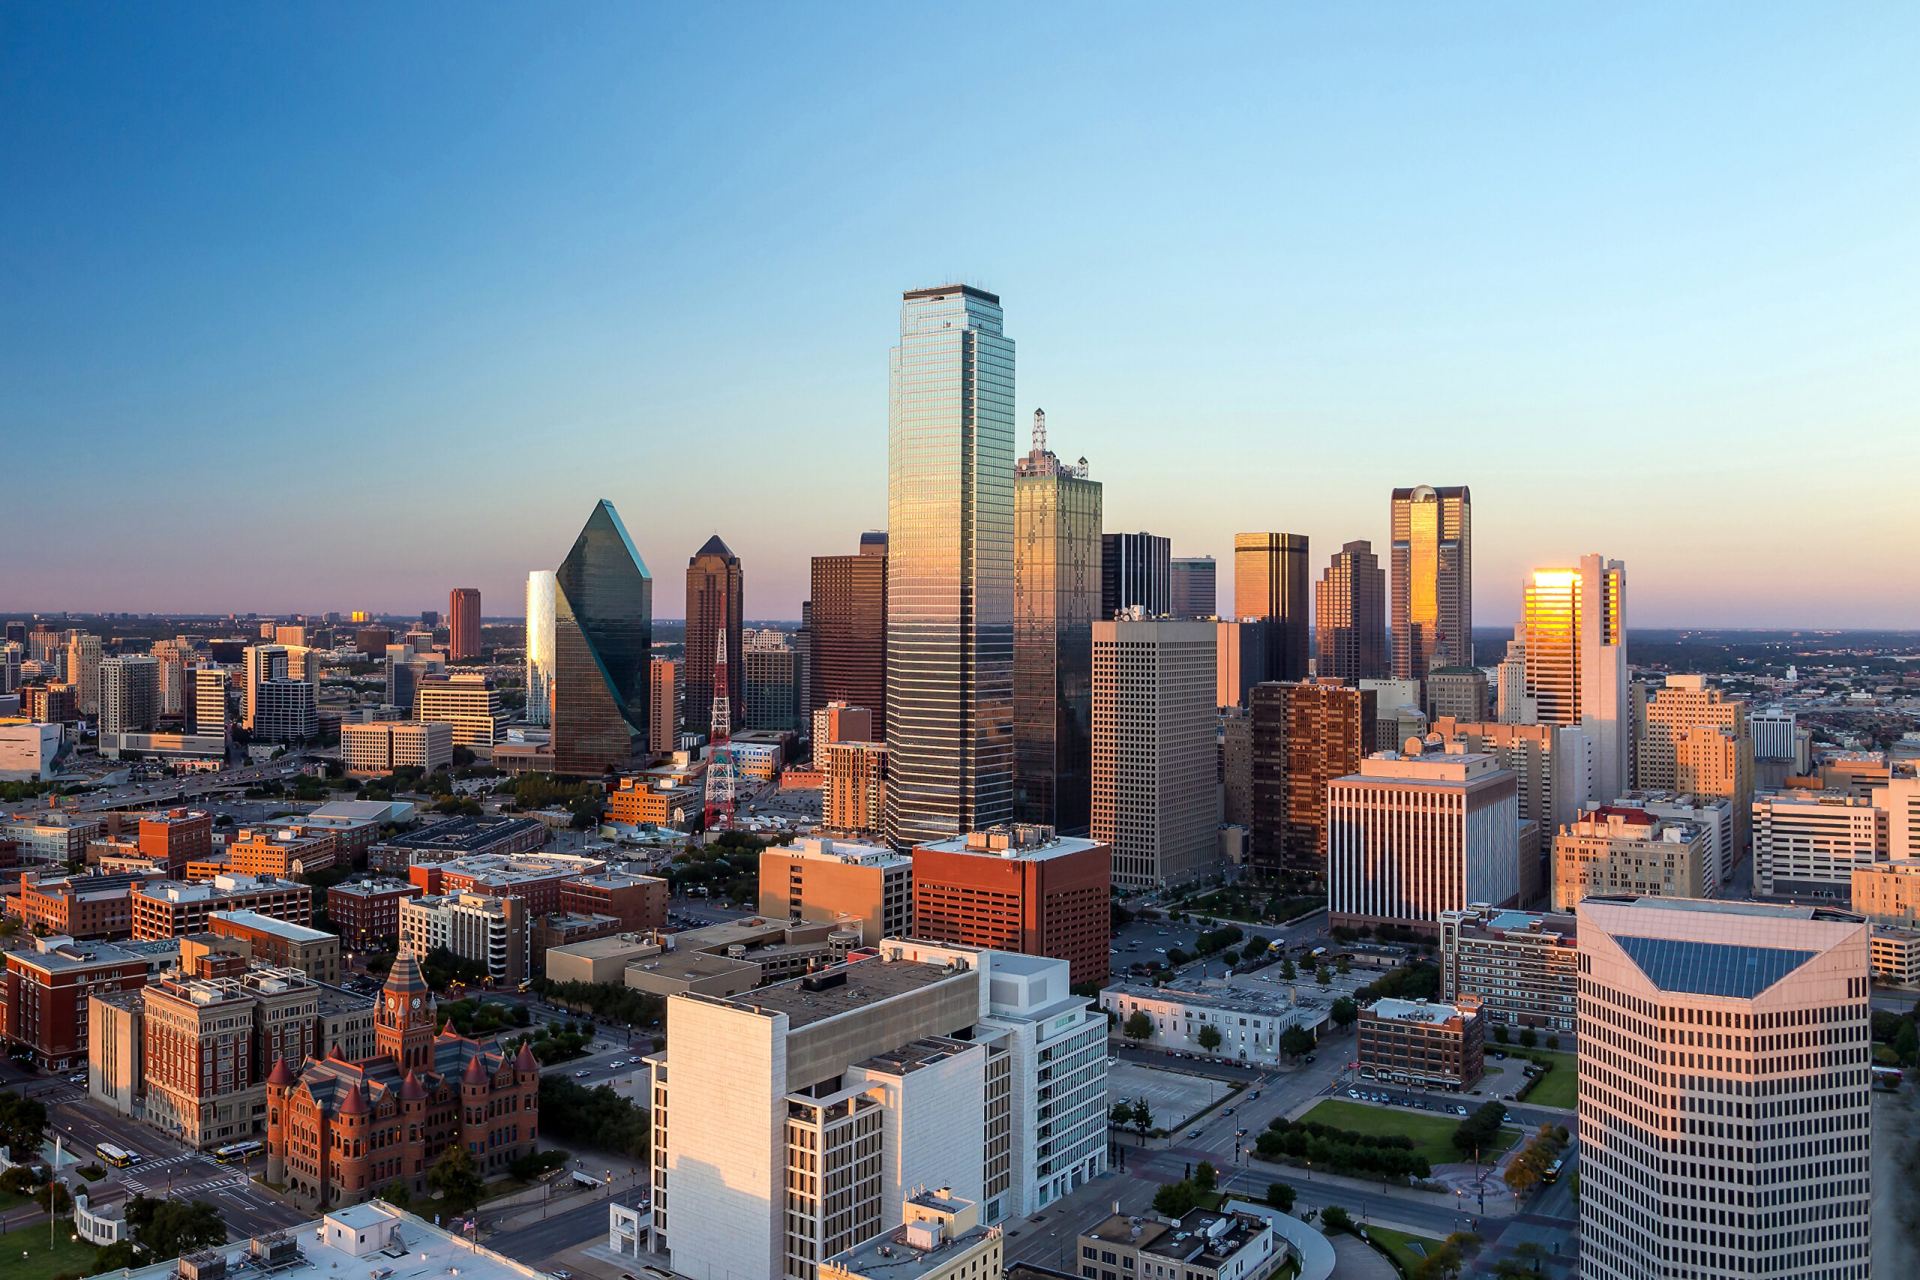 A picture of the Dallas skyline